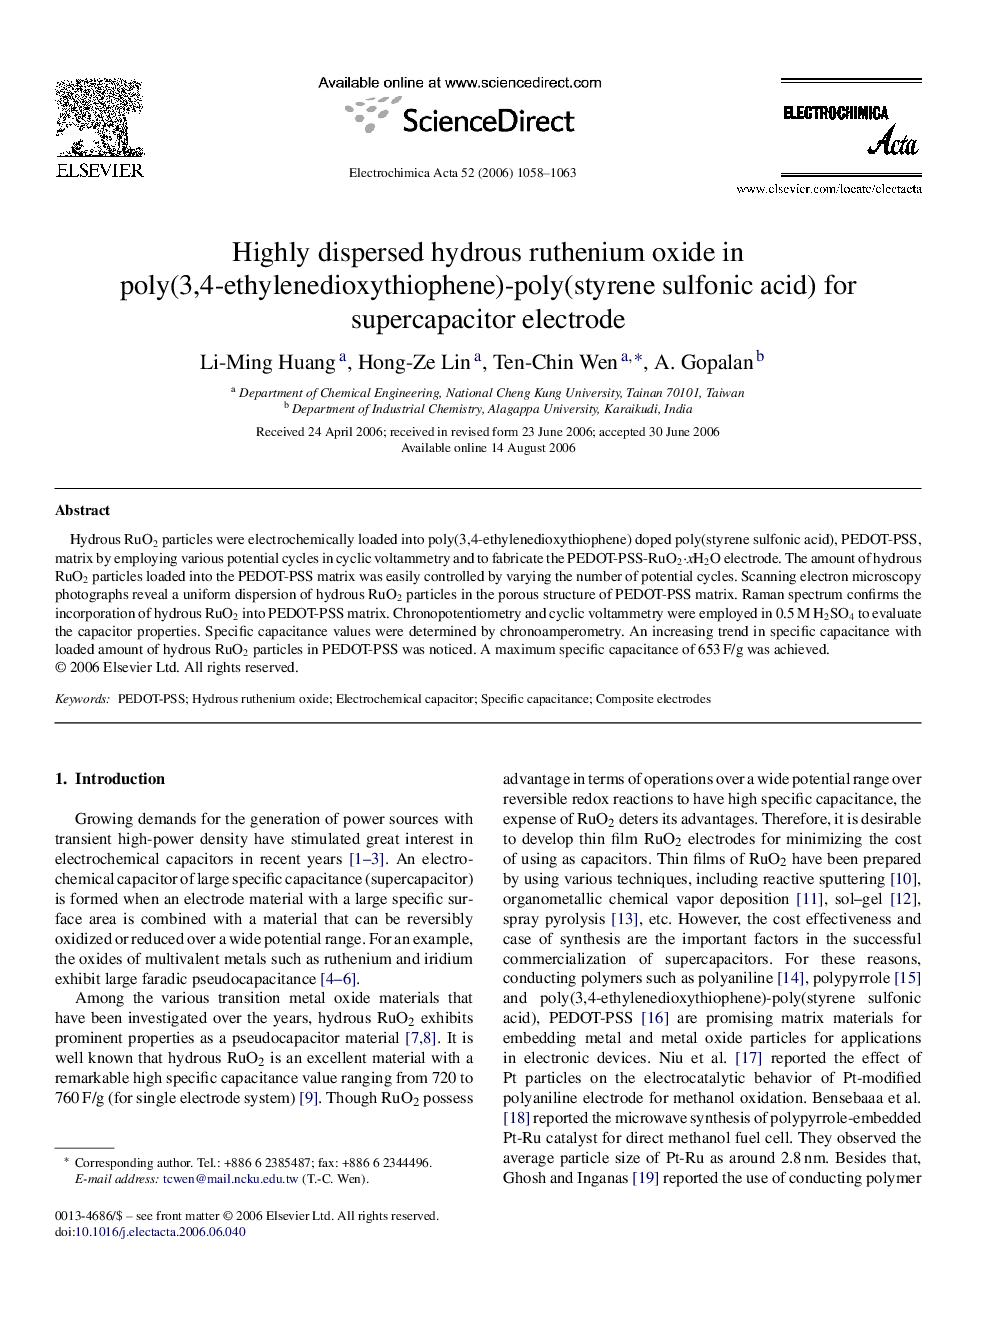 Highly dispersed hydrous ruthenium oxide in poly(3,4-ethylenedioxythiophene)-poly(styrene sulfonic acid) for supercapacitor electrode